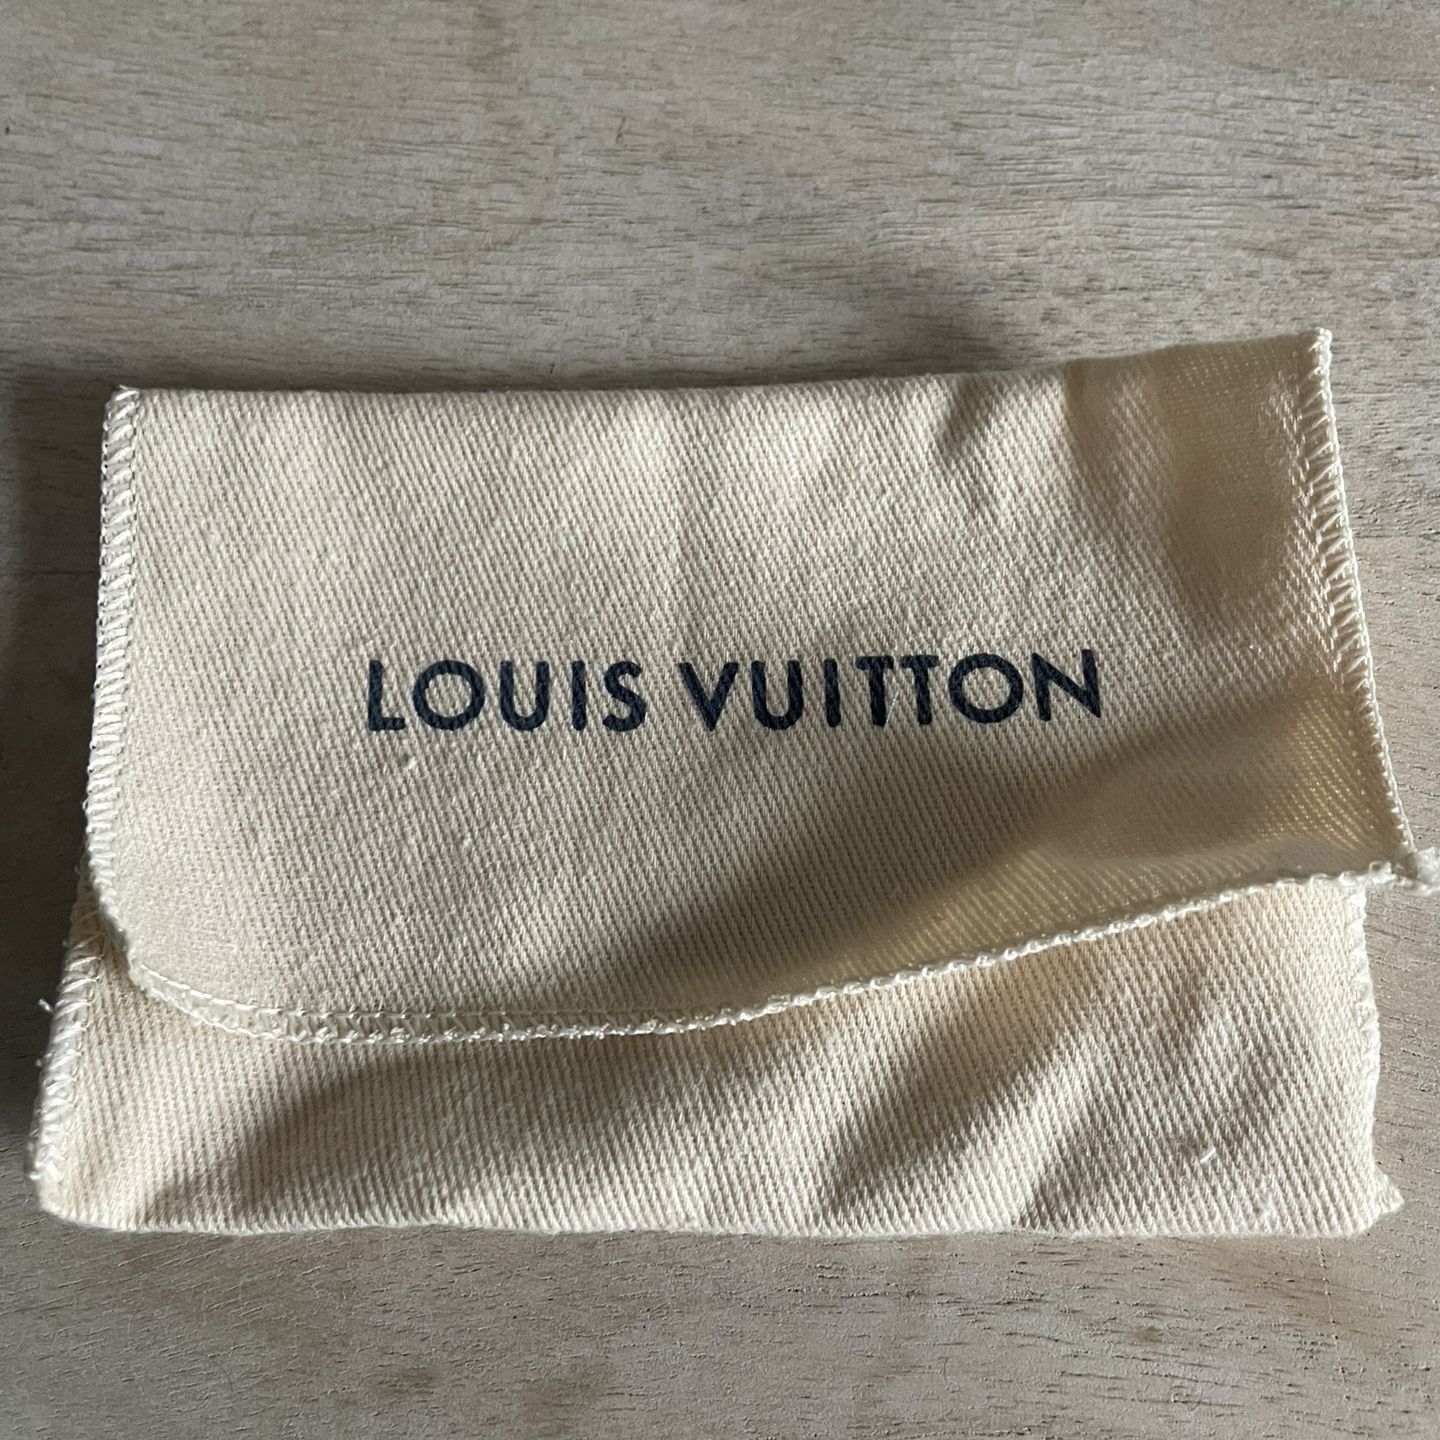 Louis Vuitton Velvet Jewelry Bag for Sale in San Dimas, CA - OfferUp